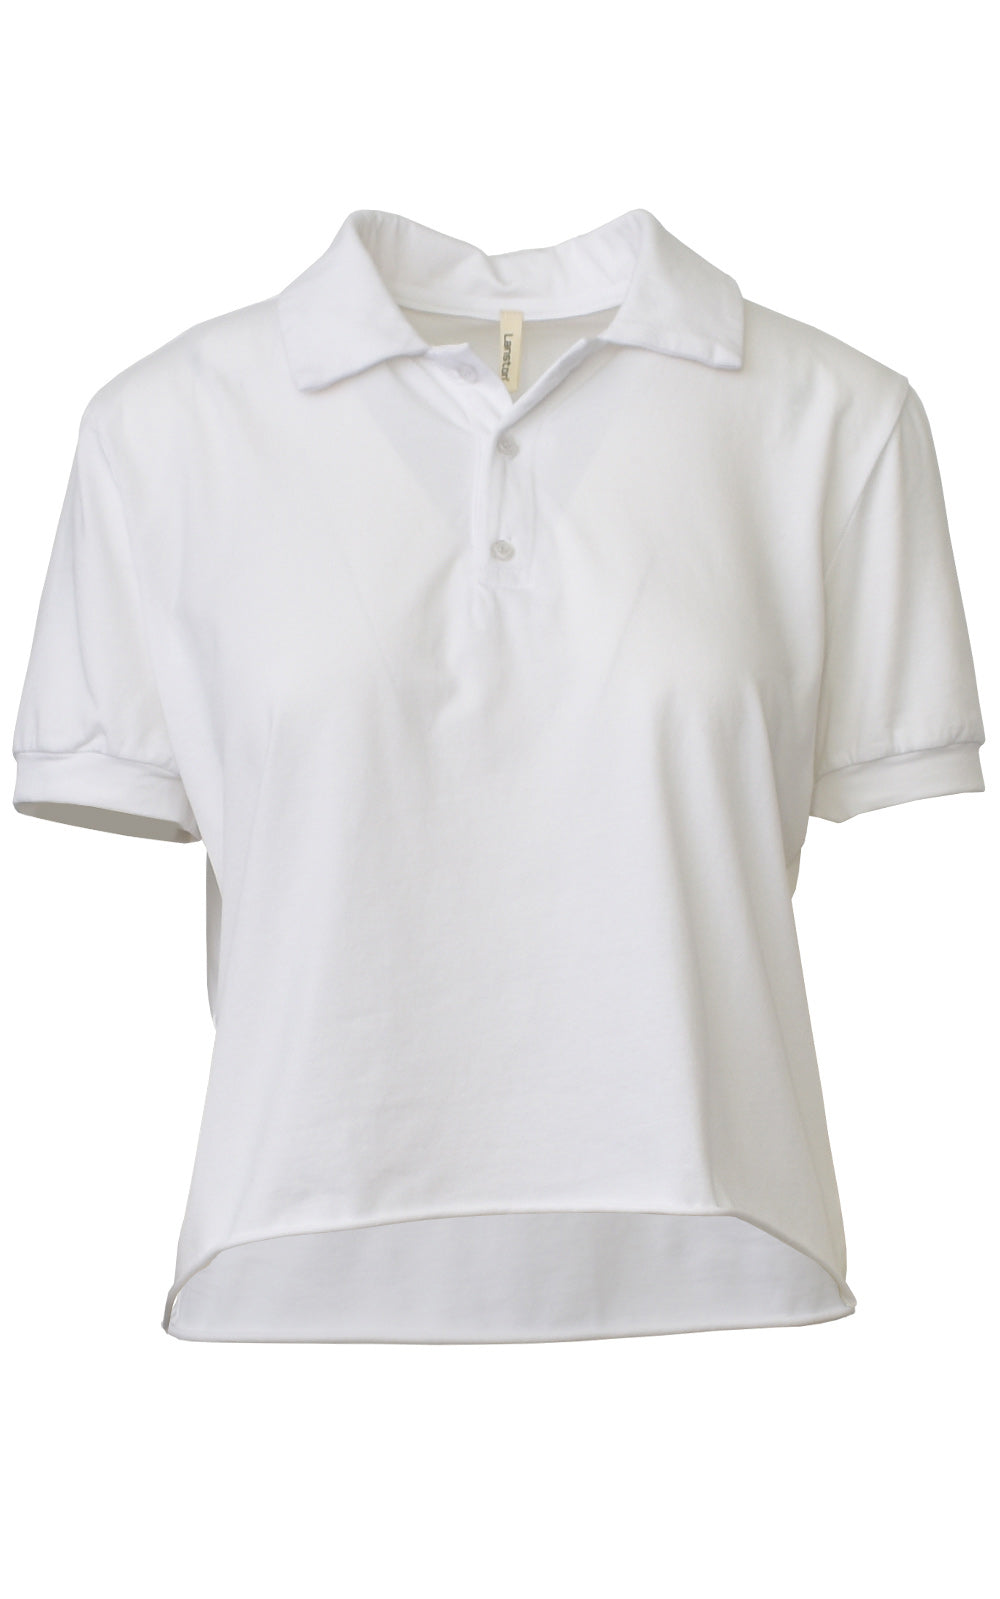 Lanston White Cutoff Crop Top Polo Shirt Front